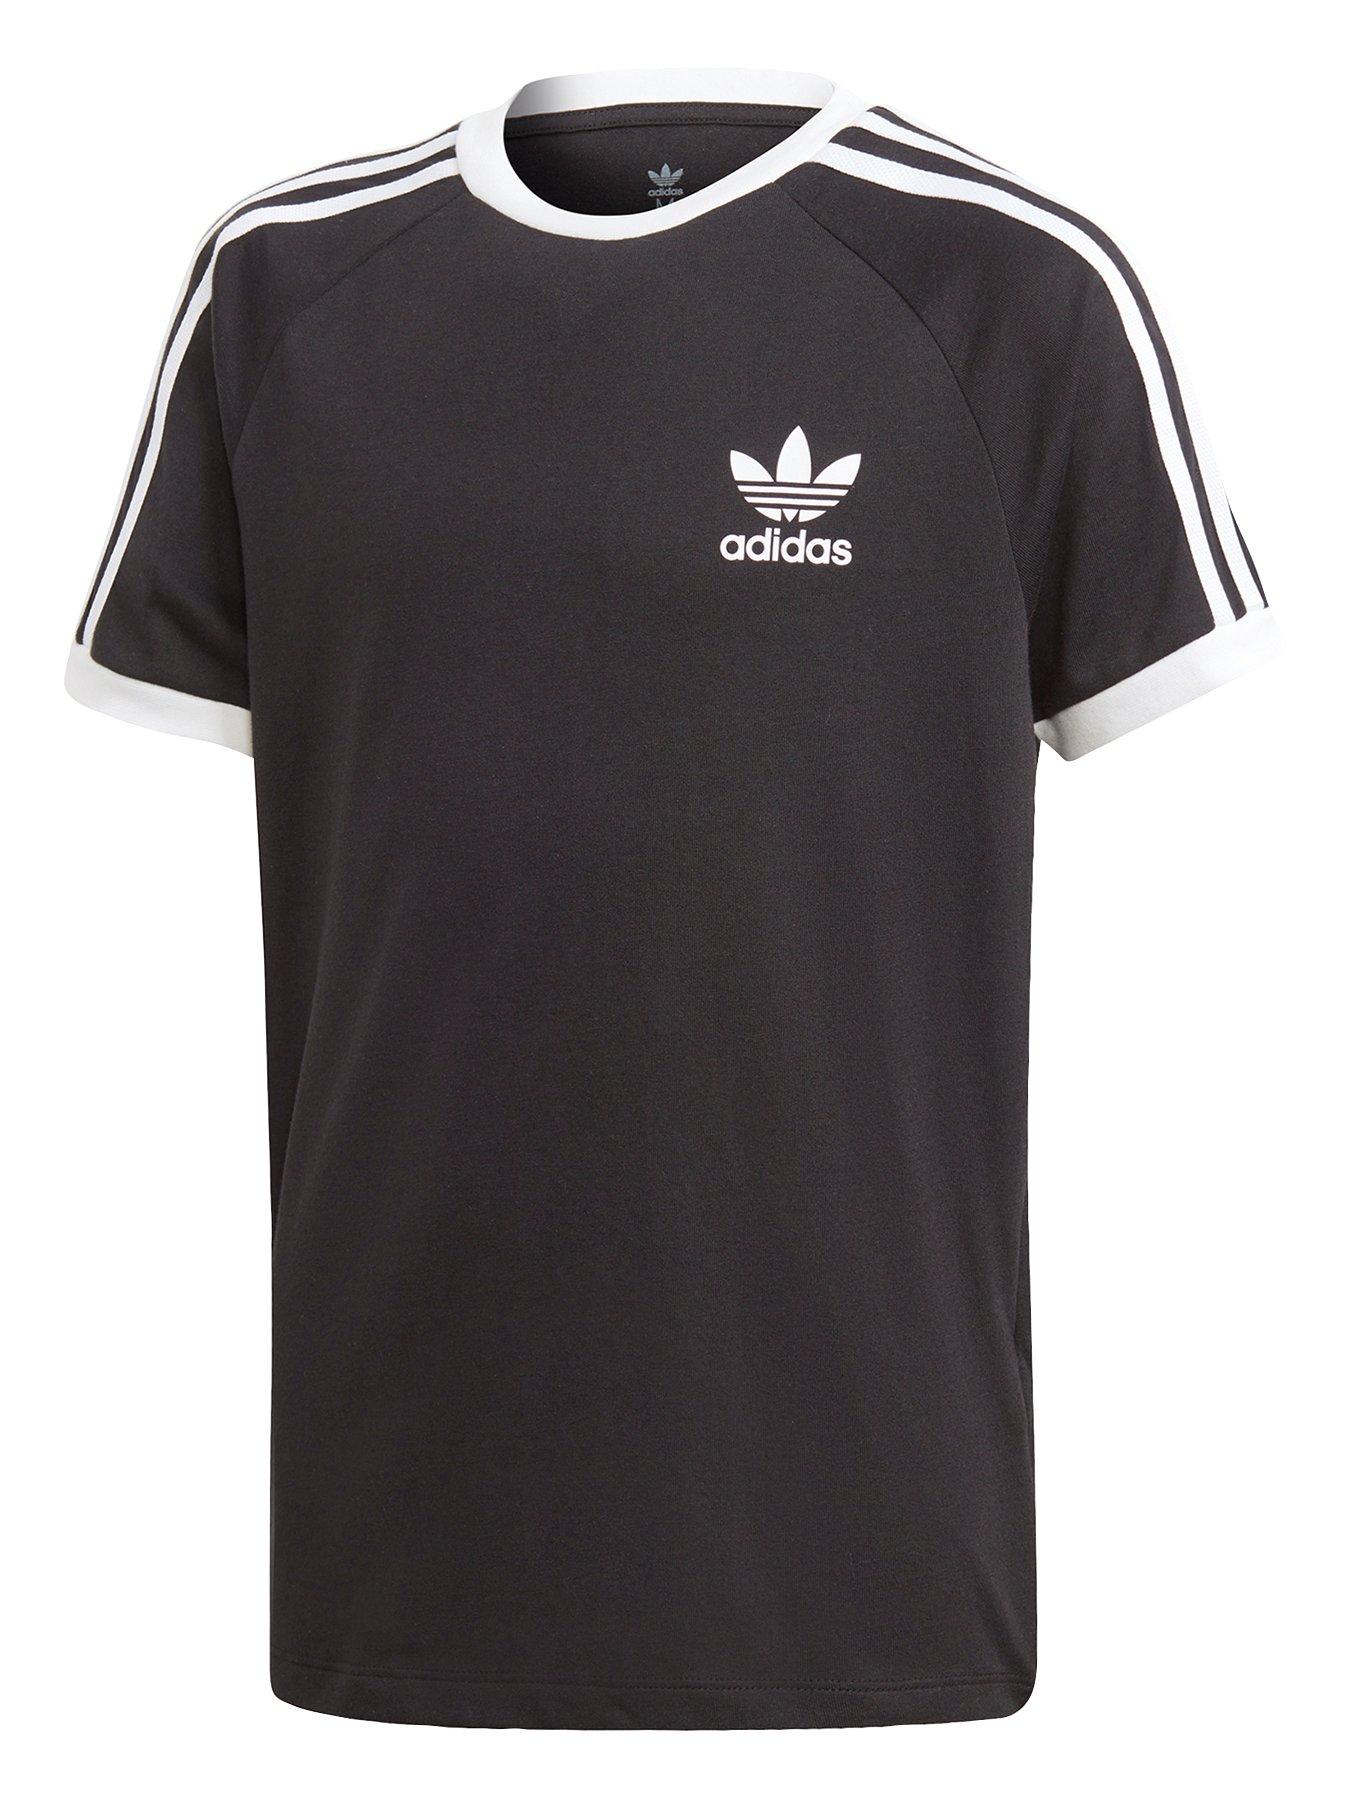 adidas Originals Boys 3 Stripe Short Sleeve T-Shirt - Black | very.co.uk